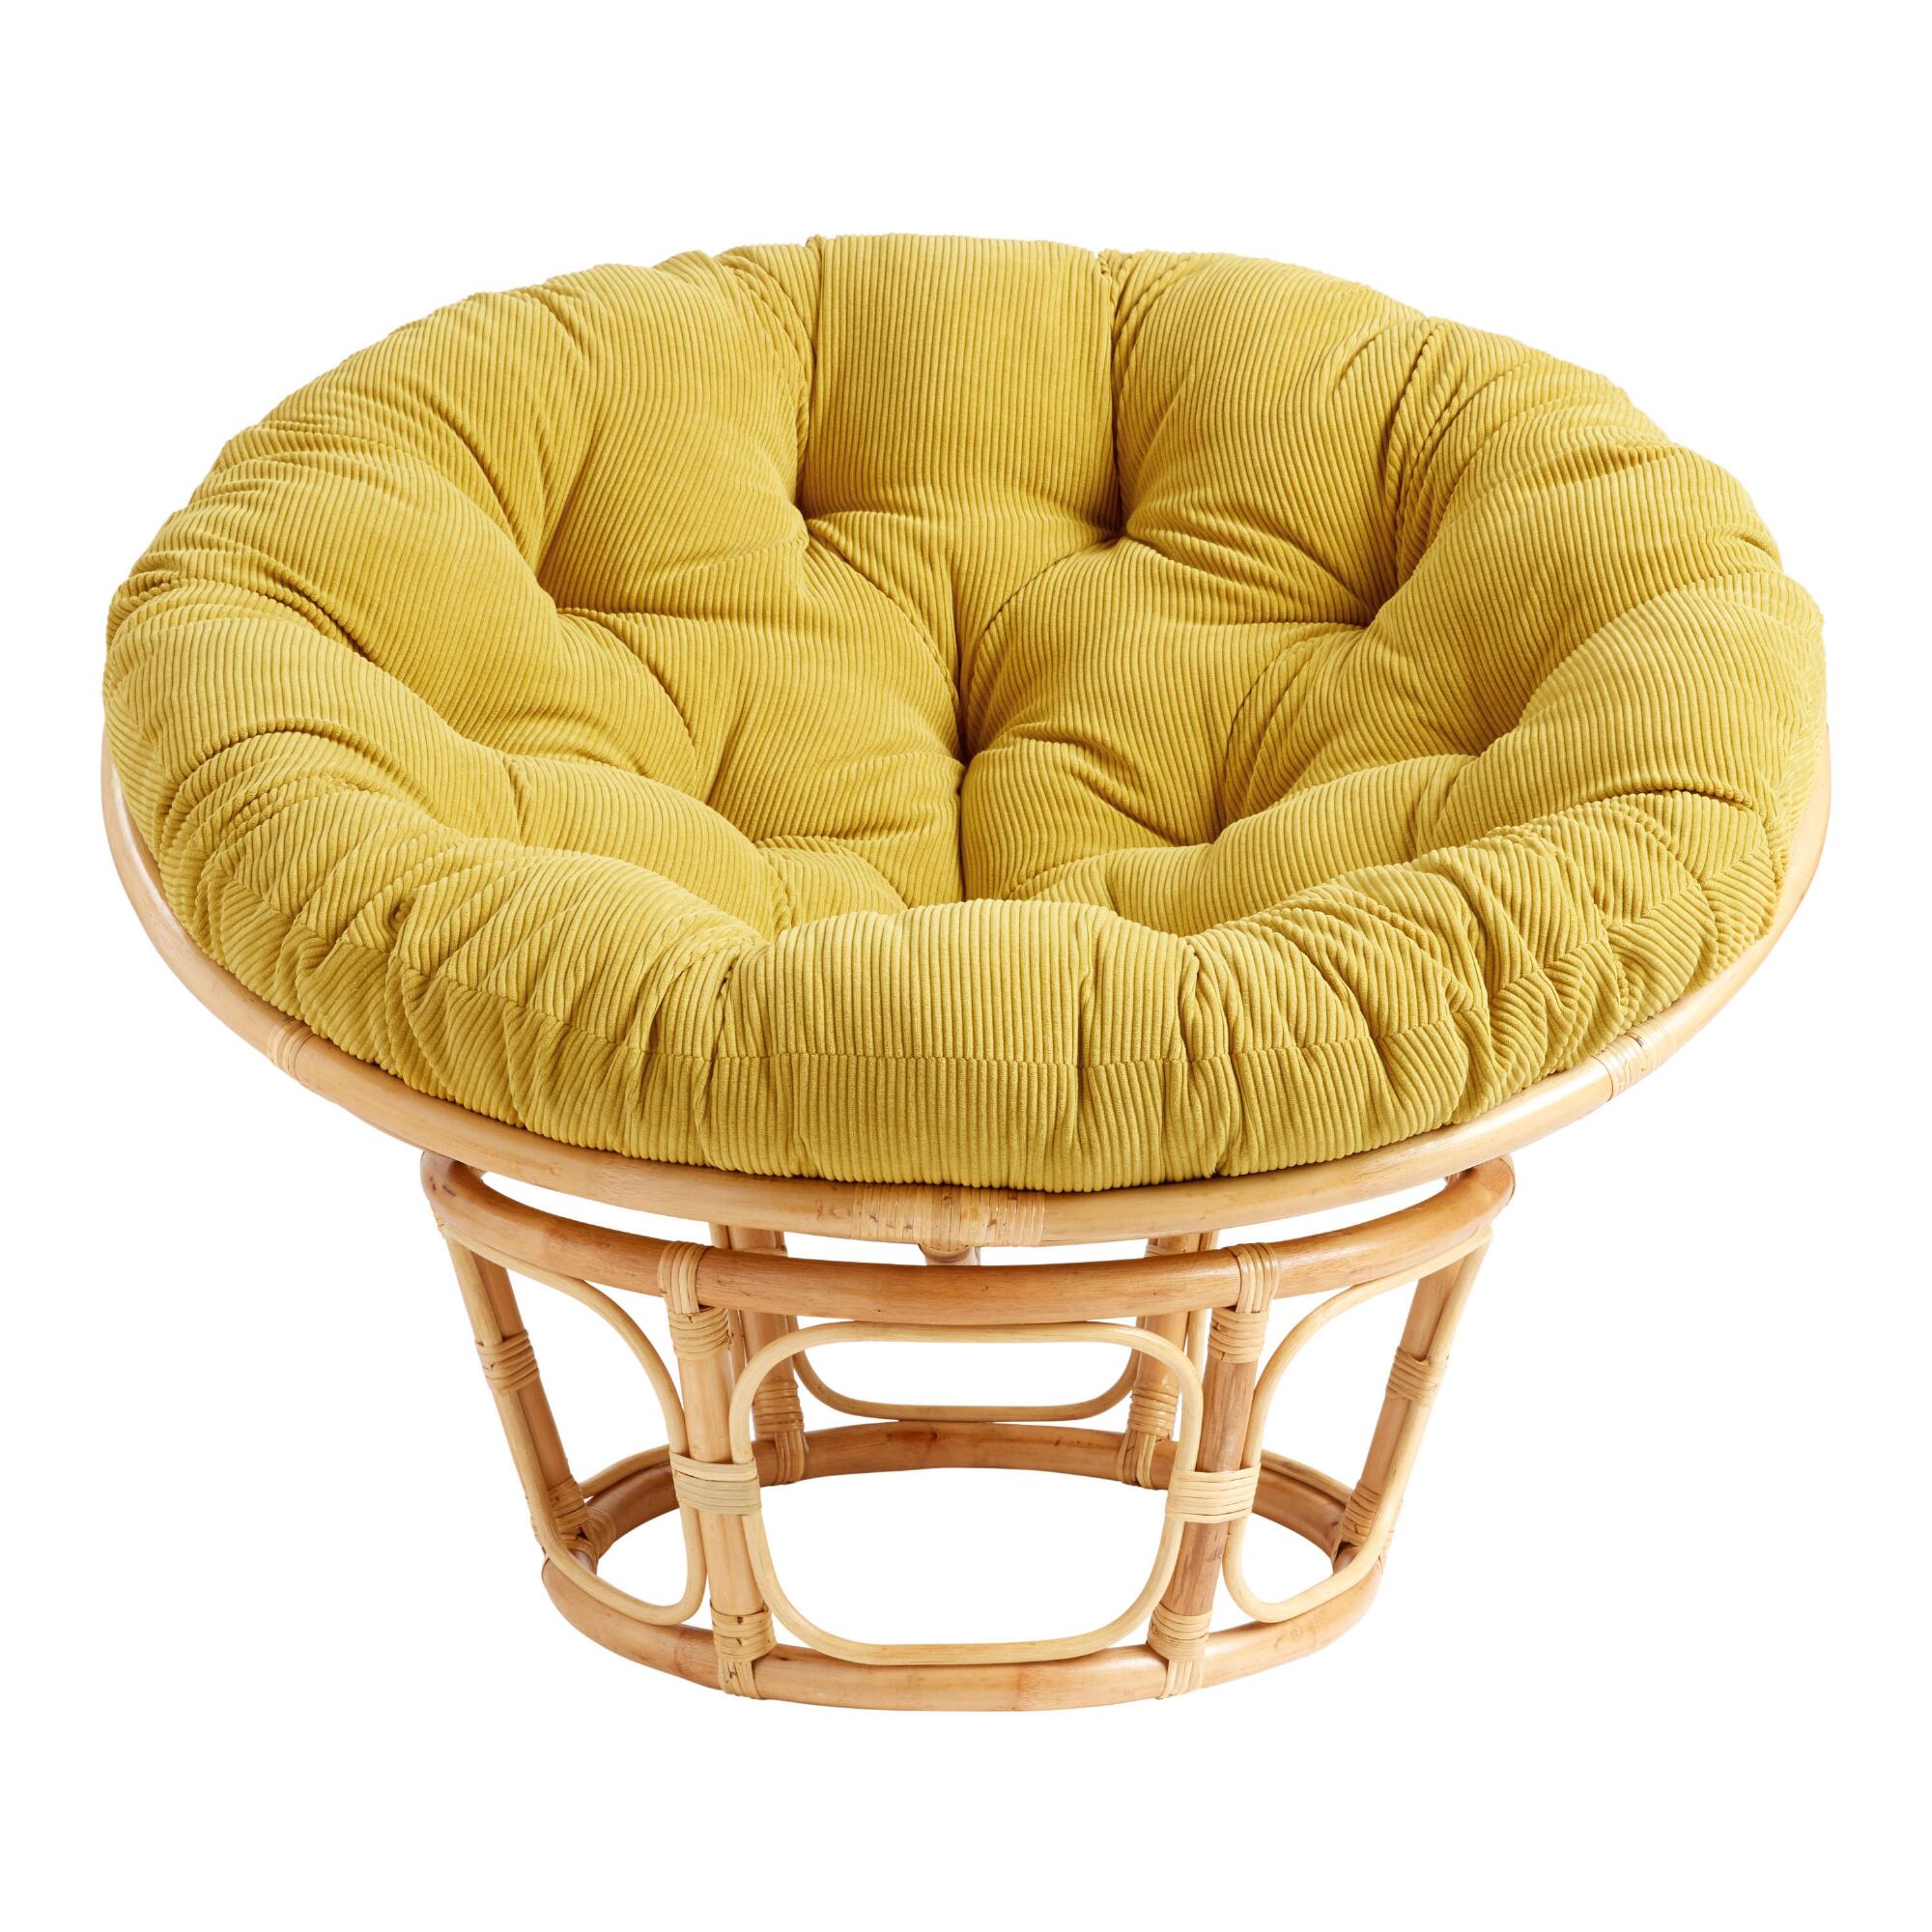 Chartreuse Velvet Corduroy Papasan Chair Cushion: Green - Cotton - 58" Round by World Market